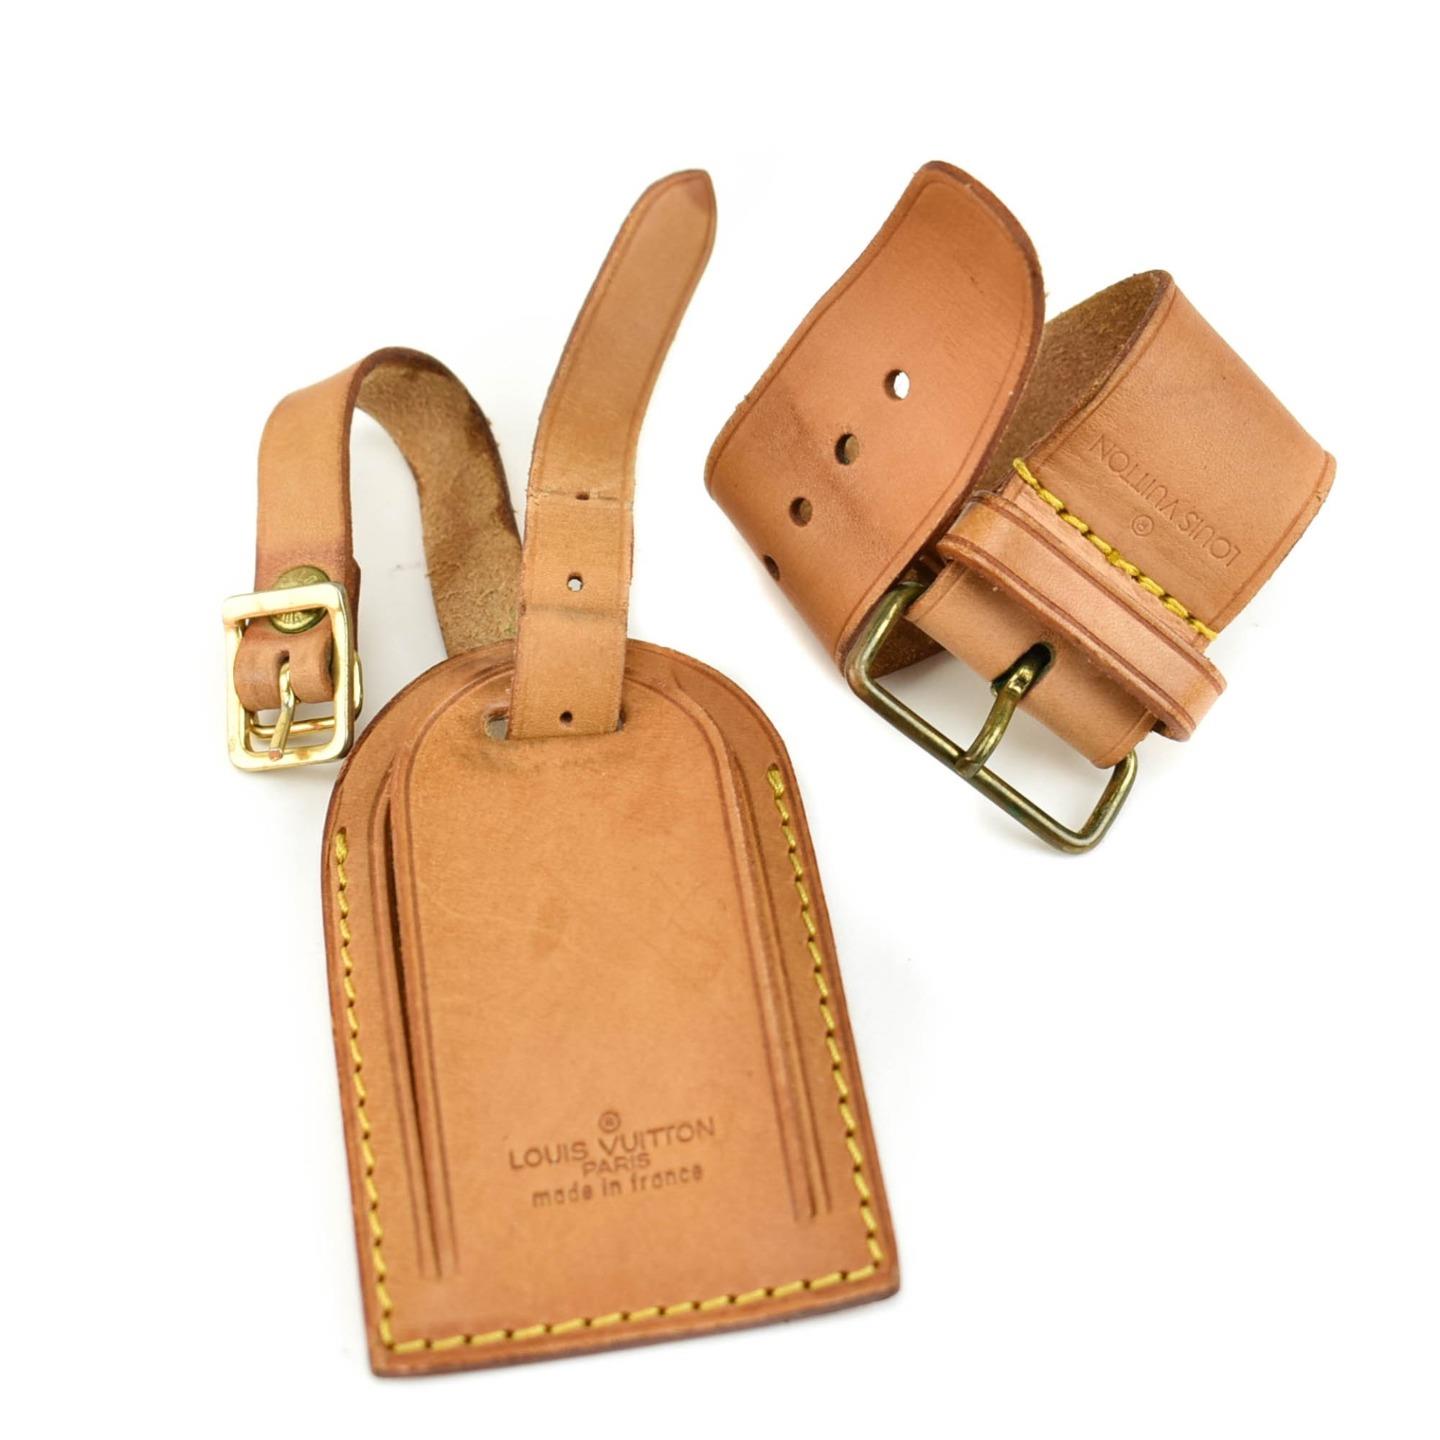 LOUIS VUITTON: Tan, Vachetta Leather Logo Luggage Tag & Keepall Set (pq) | eBay